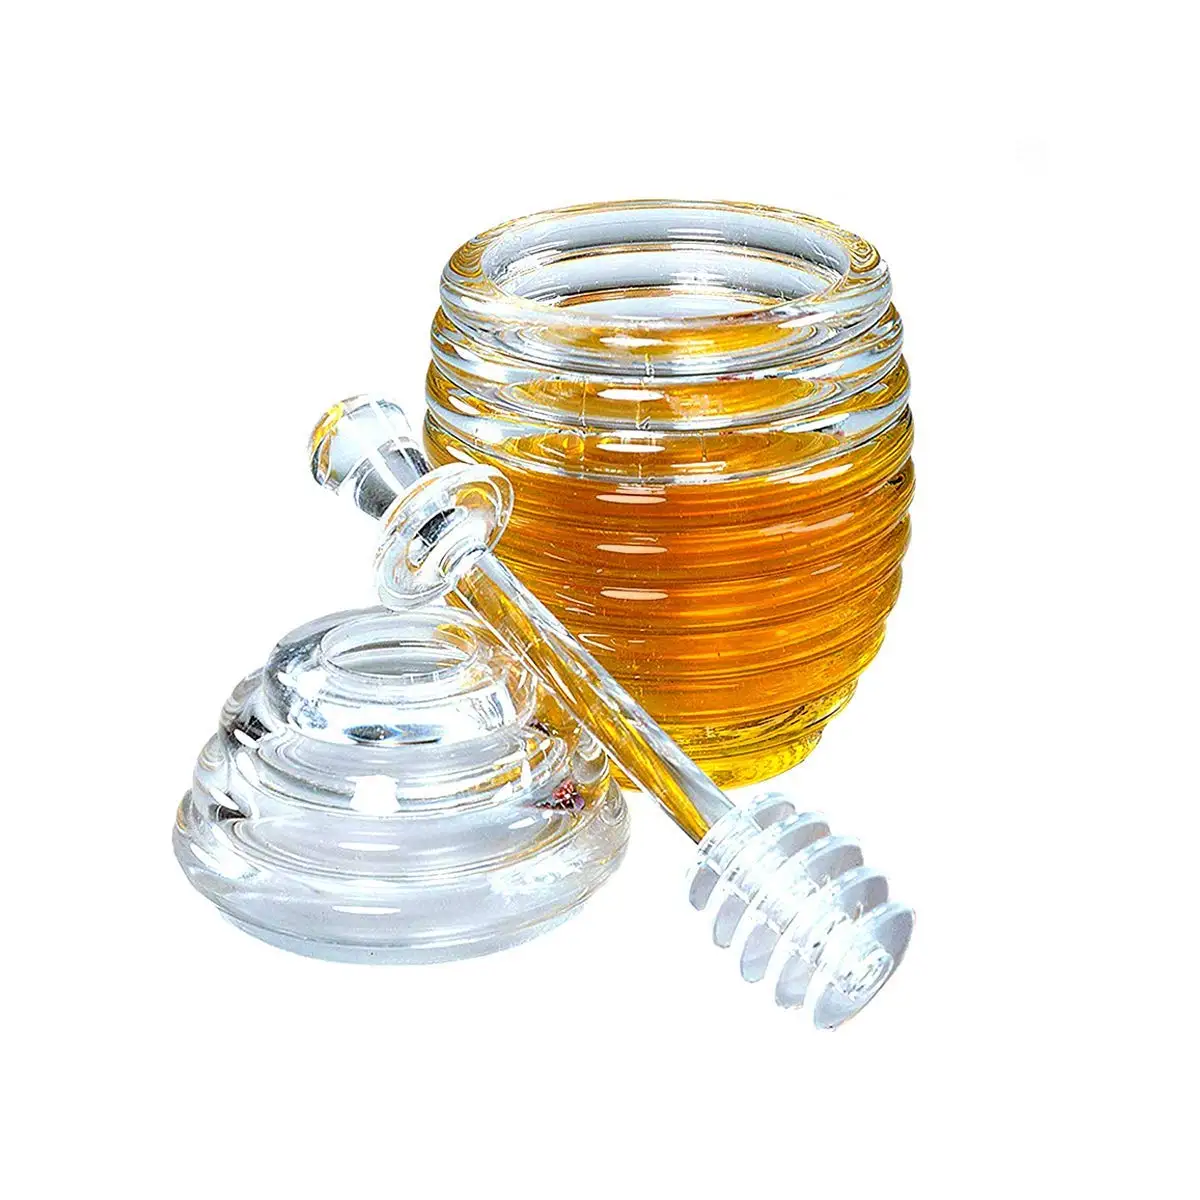 Cheap Honey Pot Cookie Jar Find Honey Pot Cookie Jar Deals On Line At